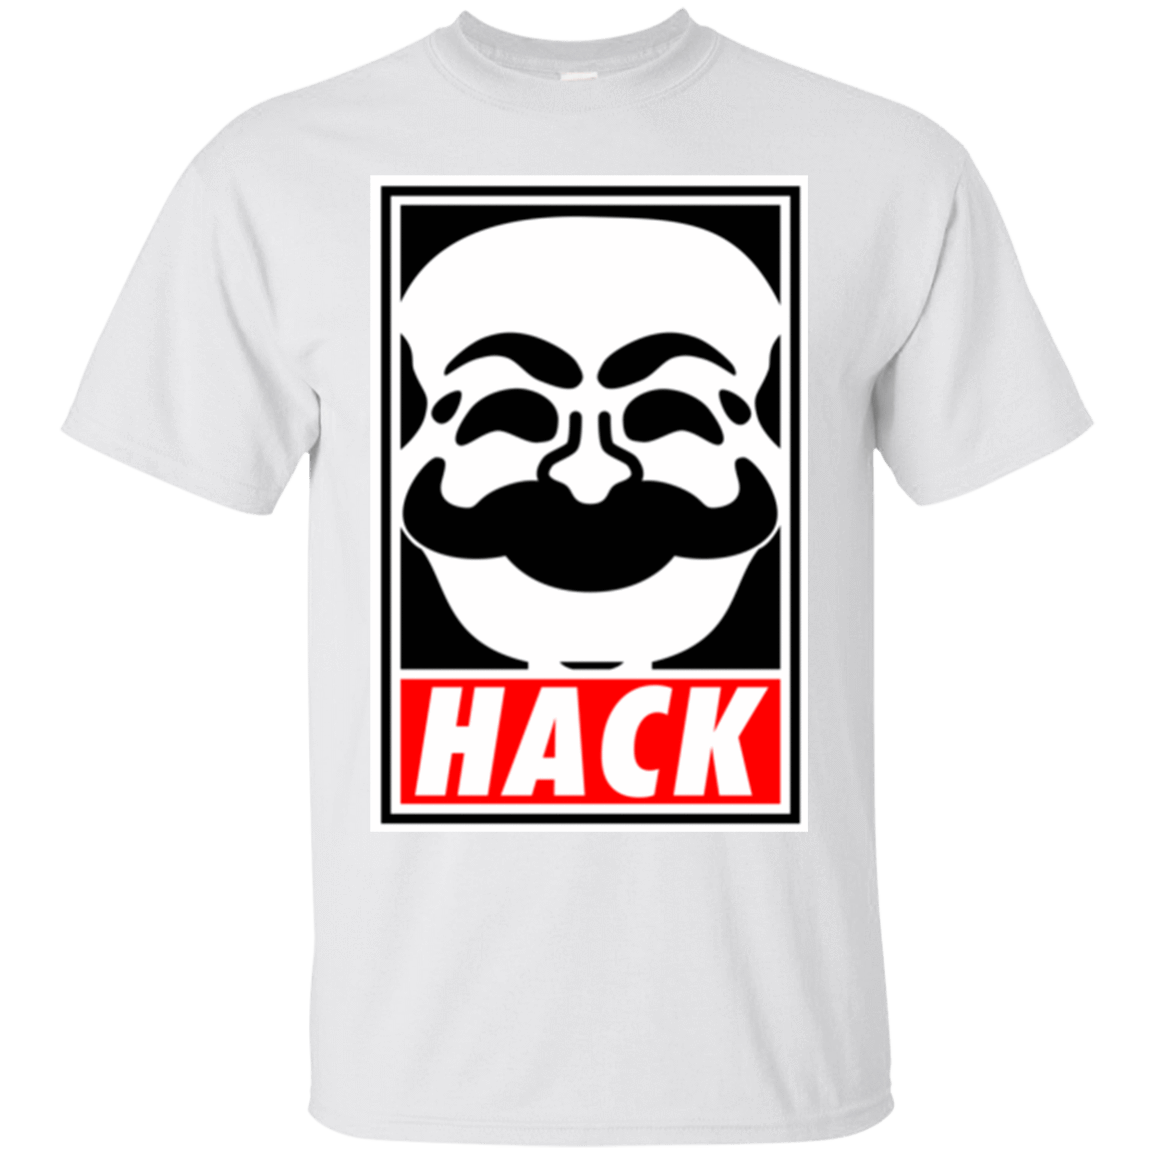 T-Shirts White / Small Hack society T-Shirt